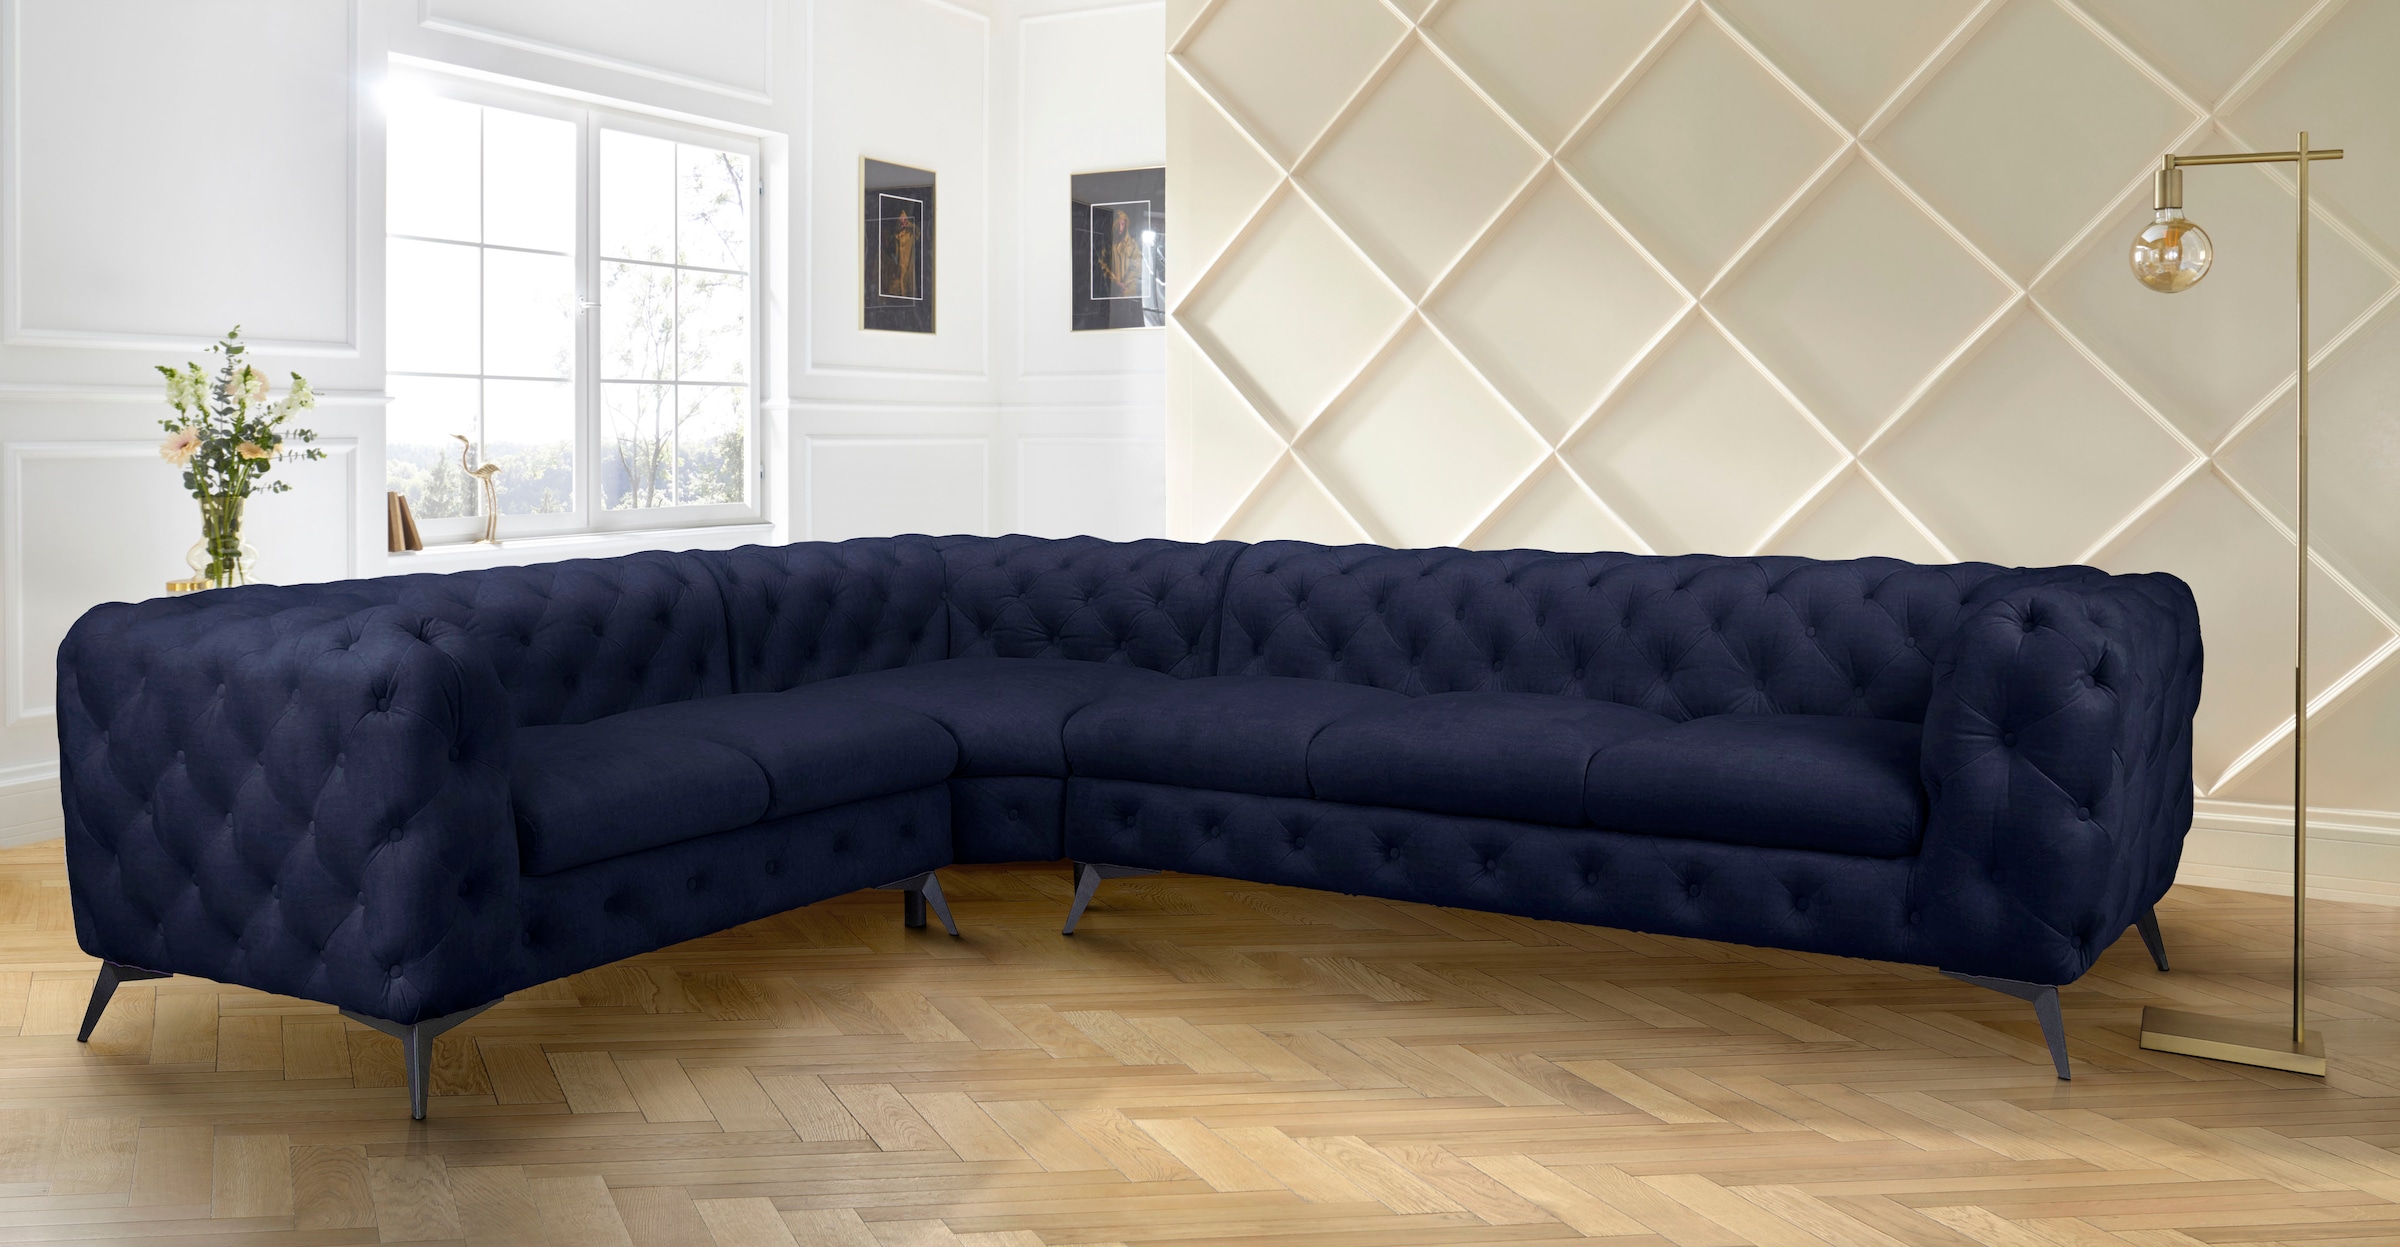 Leonique Chesterfield-Sofa »Glynis L-Form«, aufwändige Knopfheftung, moderne Chesterfield Optik, Fußfarbe wählbar